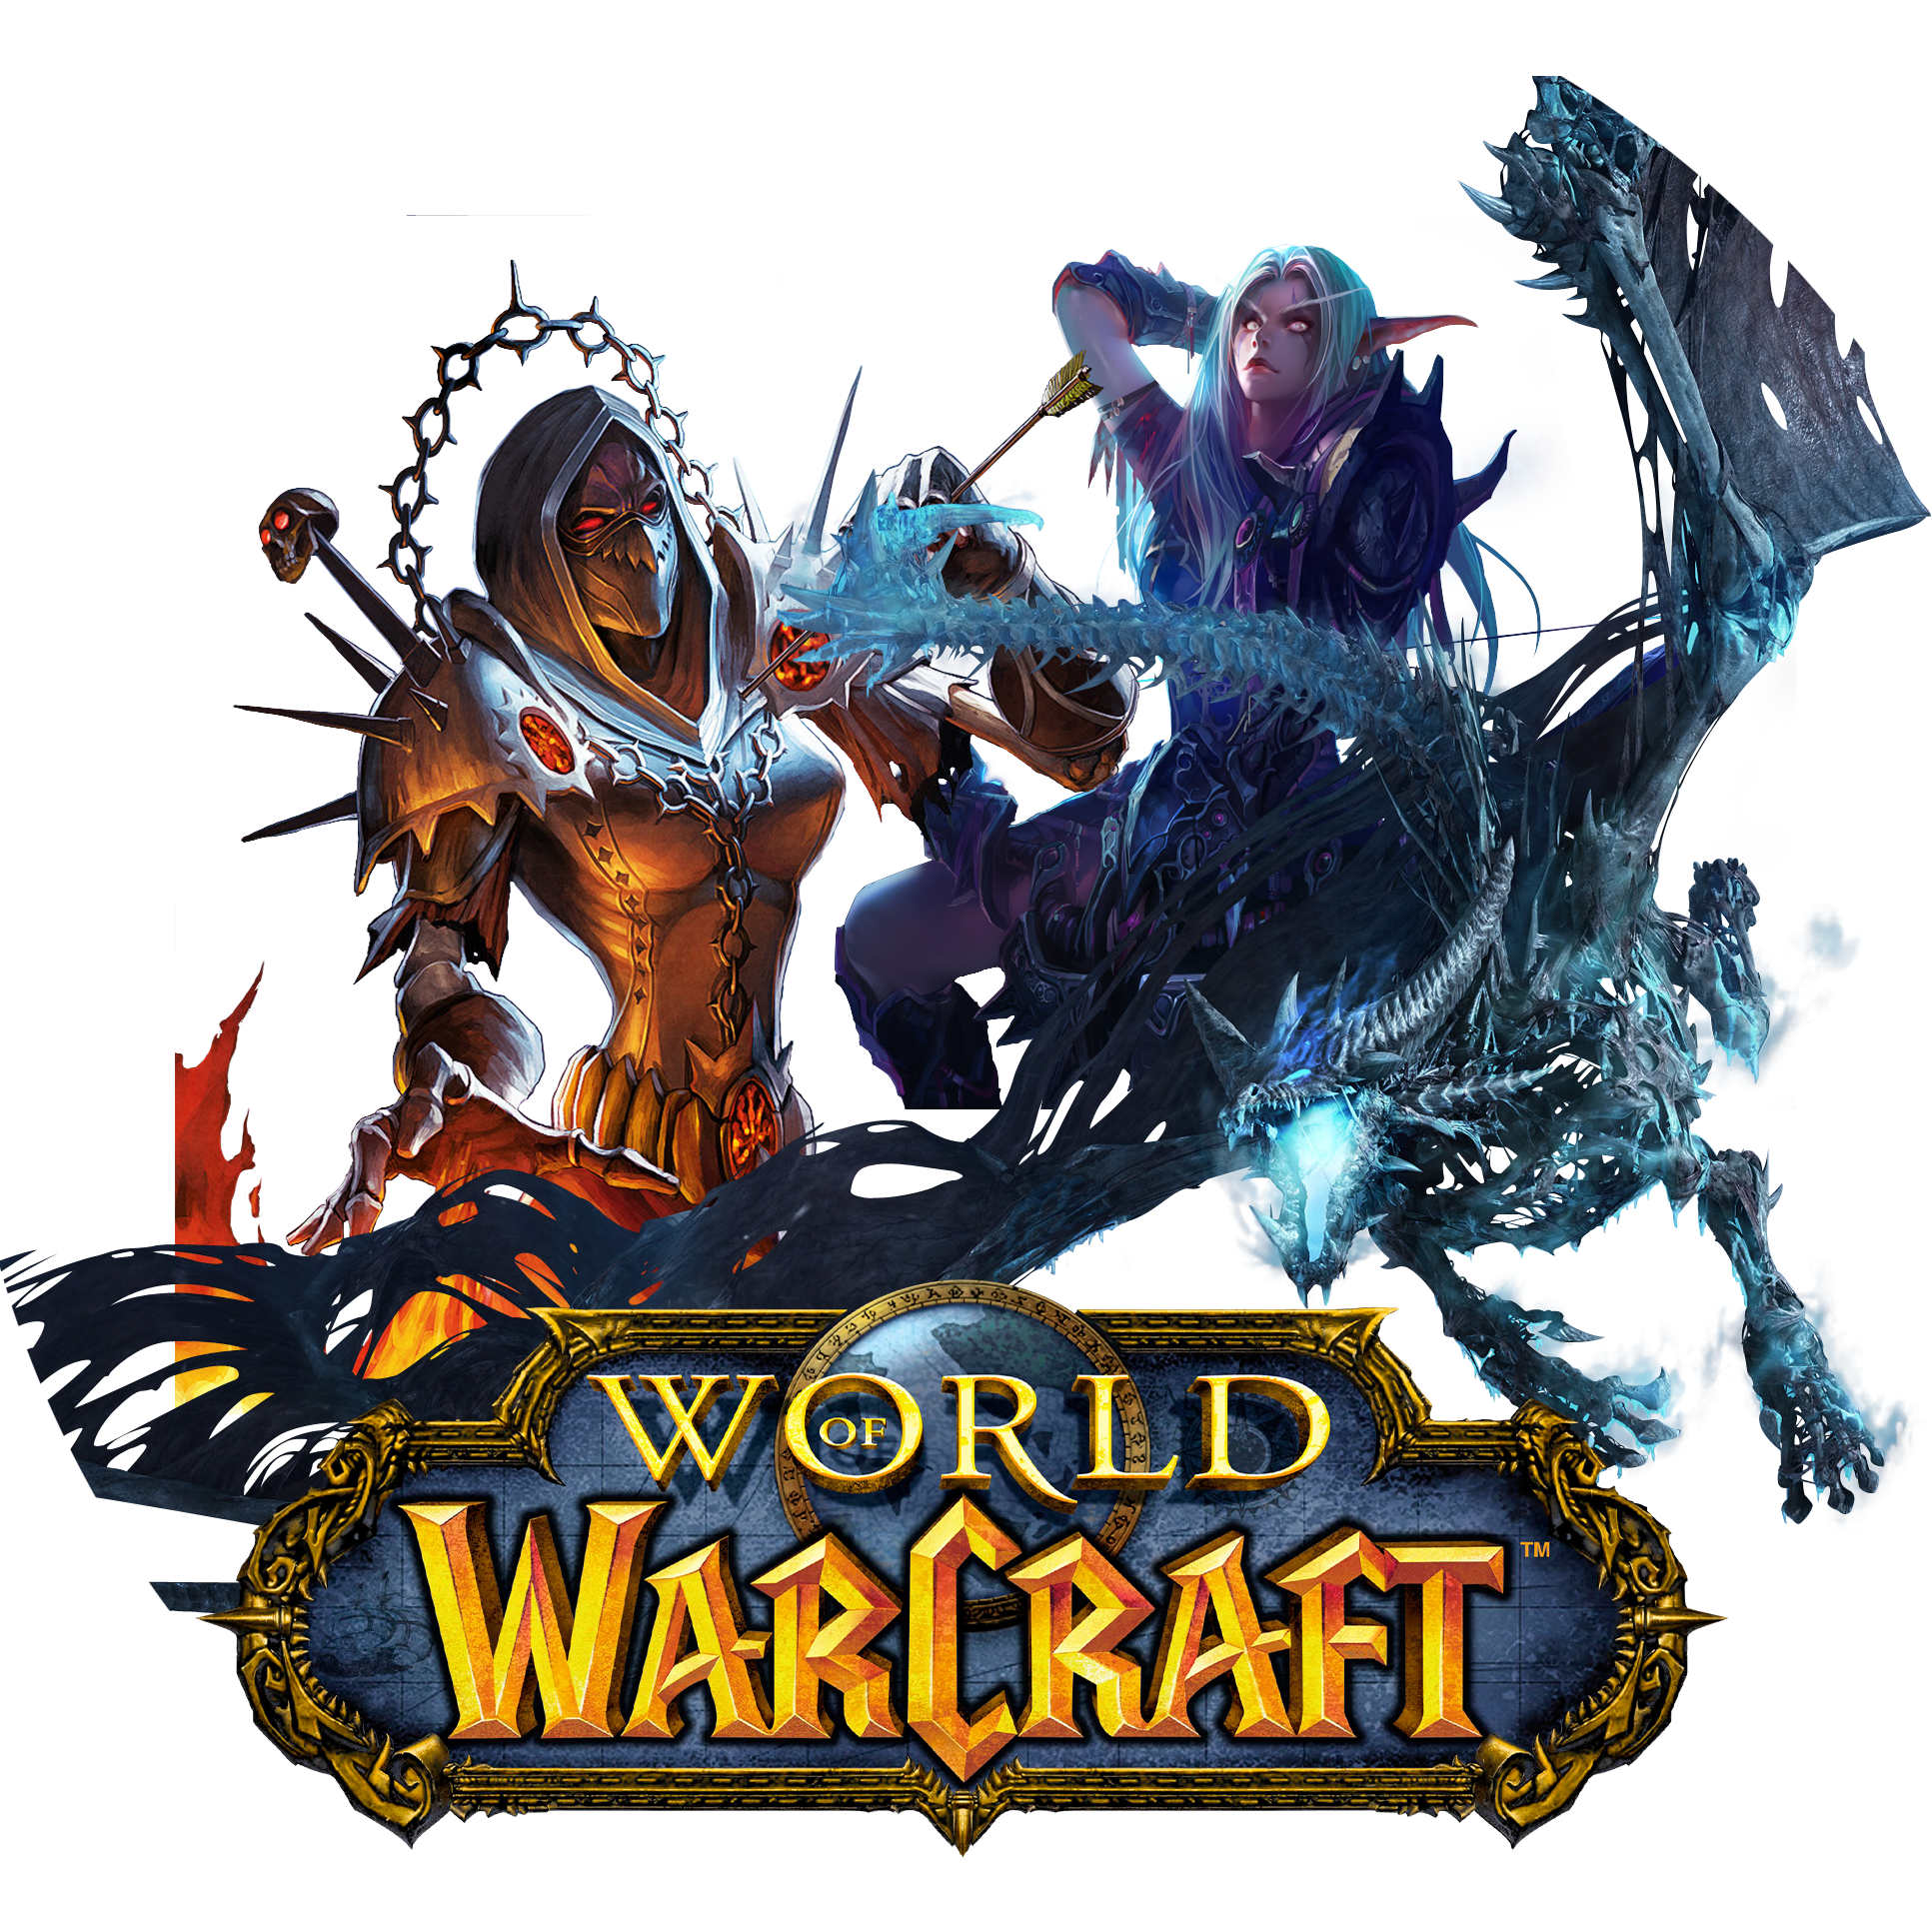 Warcraft icons. Варкрафт значок. Ярлык World of Warcraft. Ворлд оф варкрафт иконка. Значки World of Warcraft .ICO.